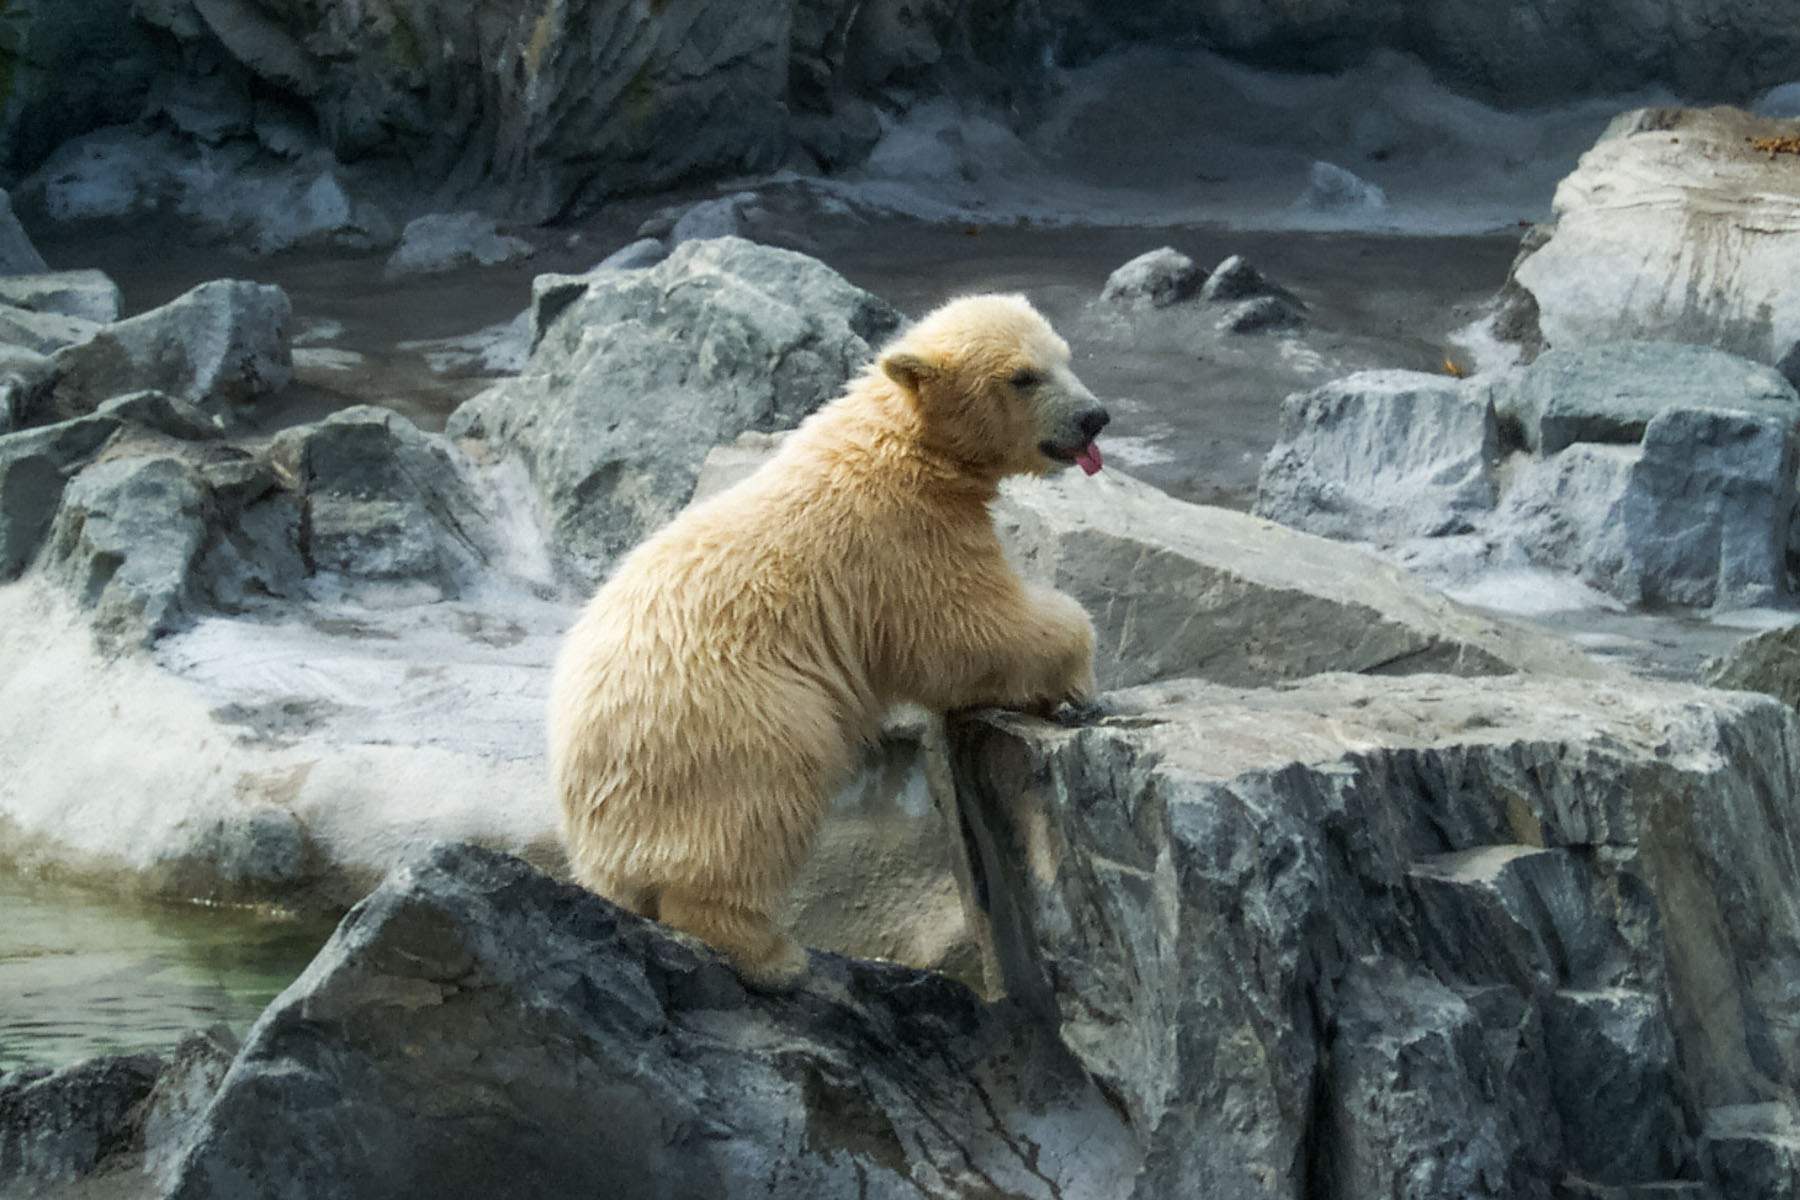 Polar bear cub, Roger Williams Zoo, Providence, Rhode Island.  Click for next photo.